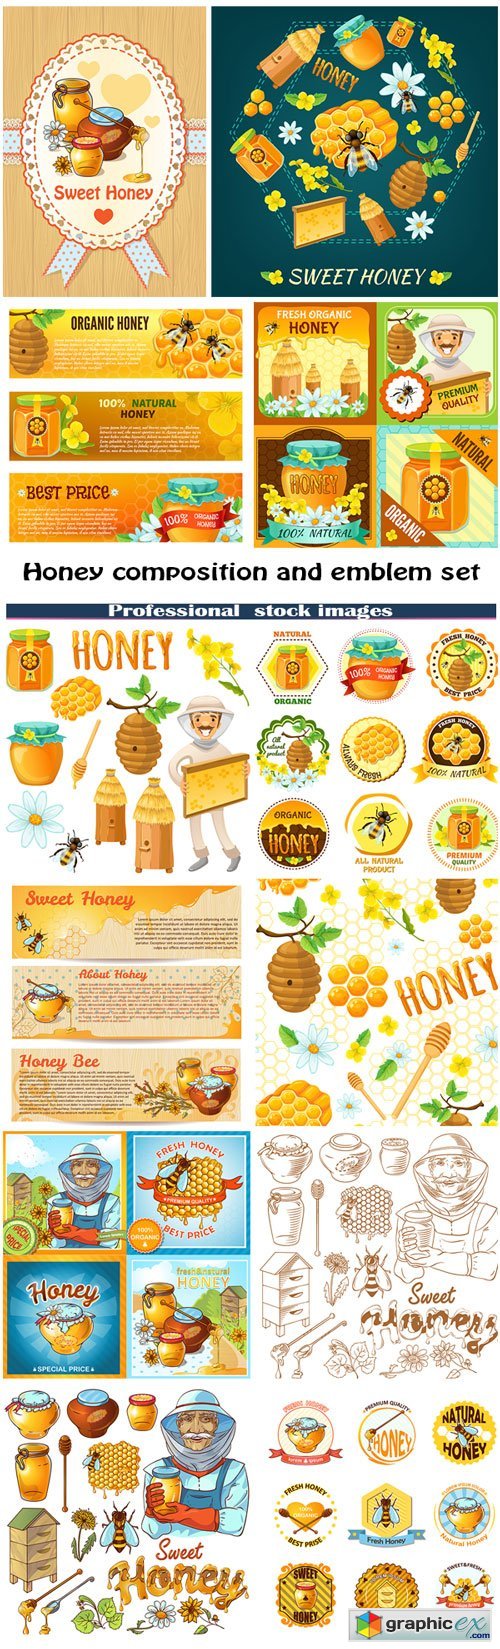 Honey composition and emblem set